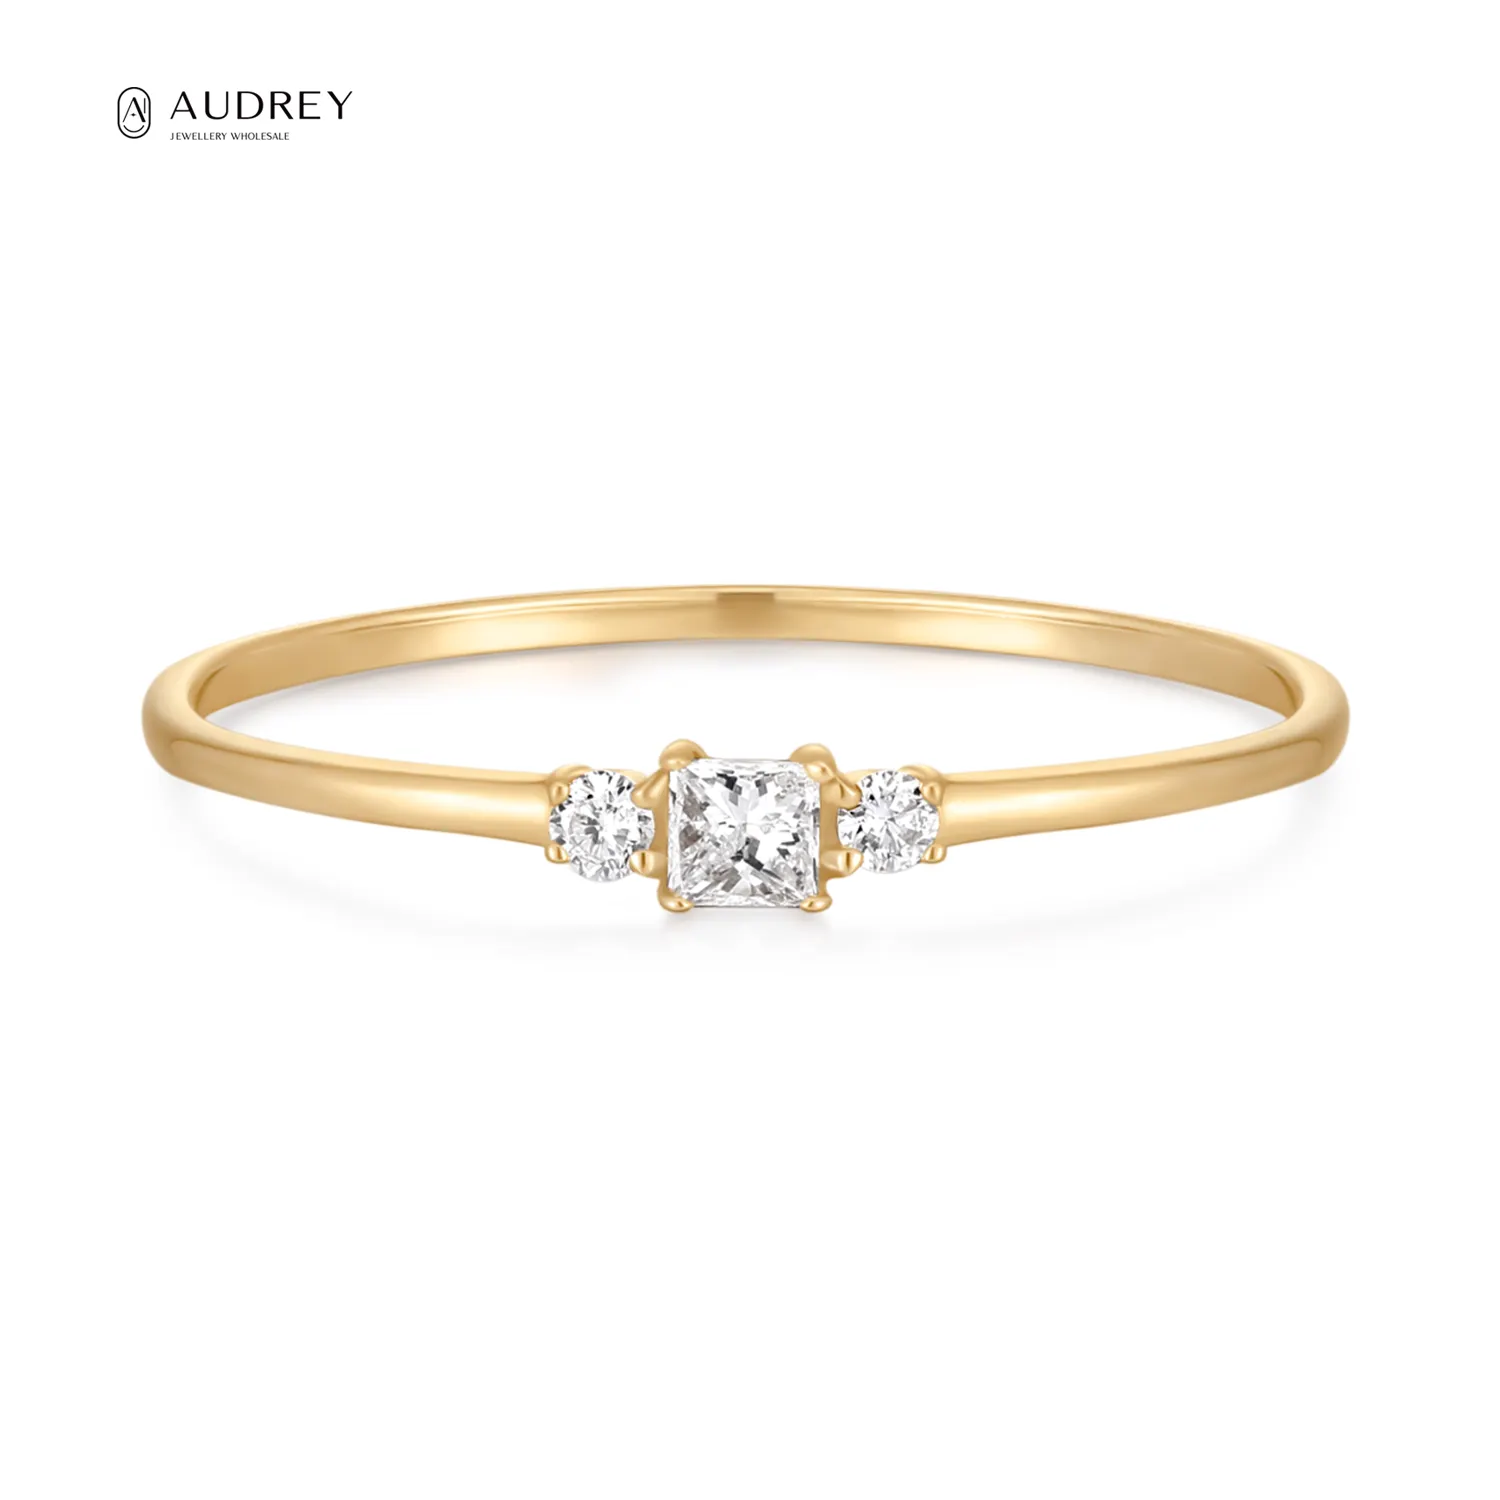 Audrey Fashion Luxury Jewelry Diamond Rings 14K Gold Wedding Ring Engagement 14K Solid Gold Diamond Bridal Ring Set